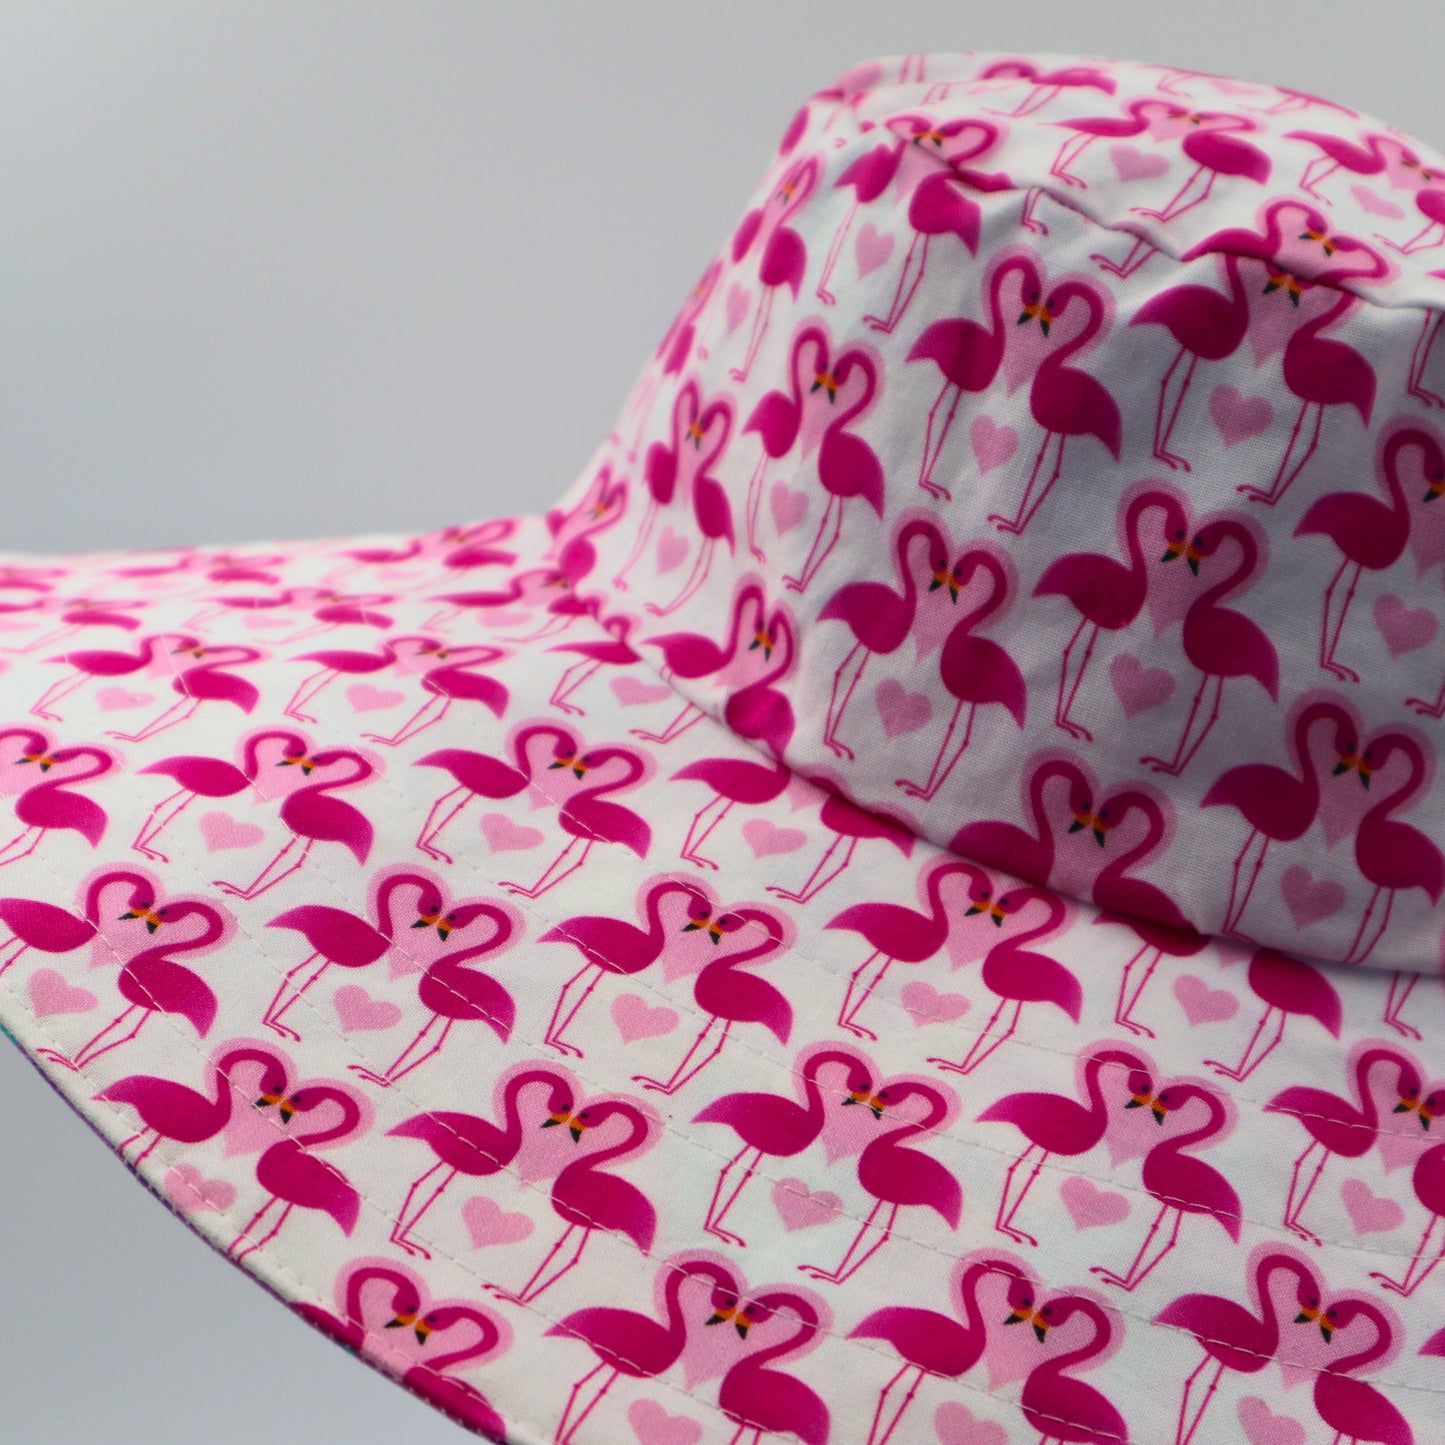 Wide Brim Reversible Sun Hat, Ladies / Girls sizes avail